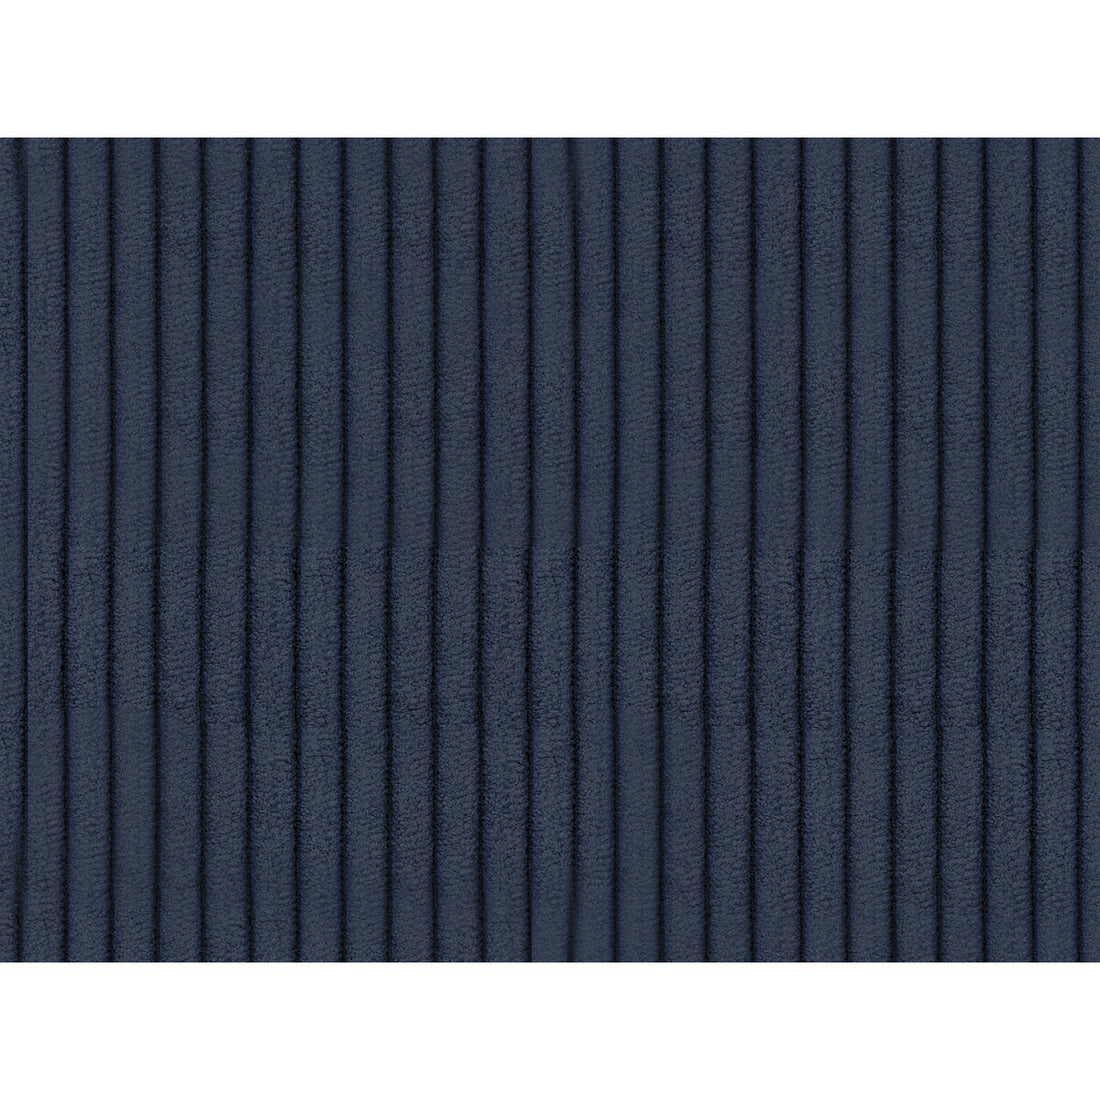 Kravet Smart fabric in 32966-50 color - pattern 32966.50.0 - by Kravet Smart